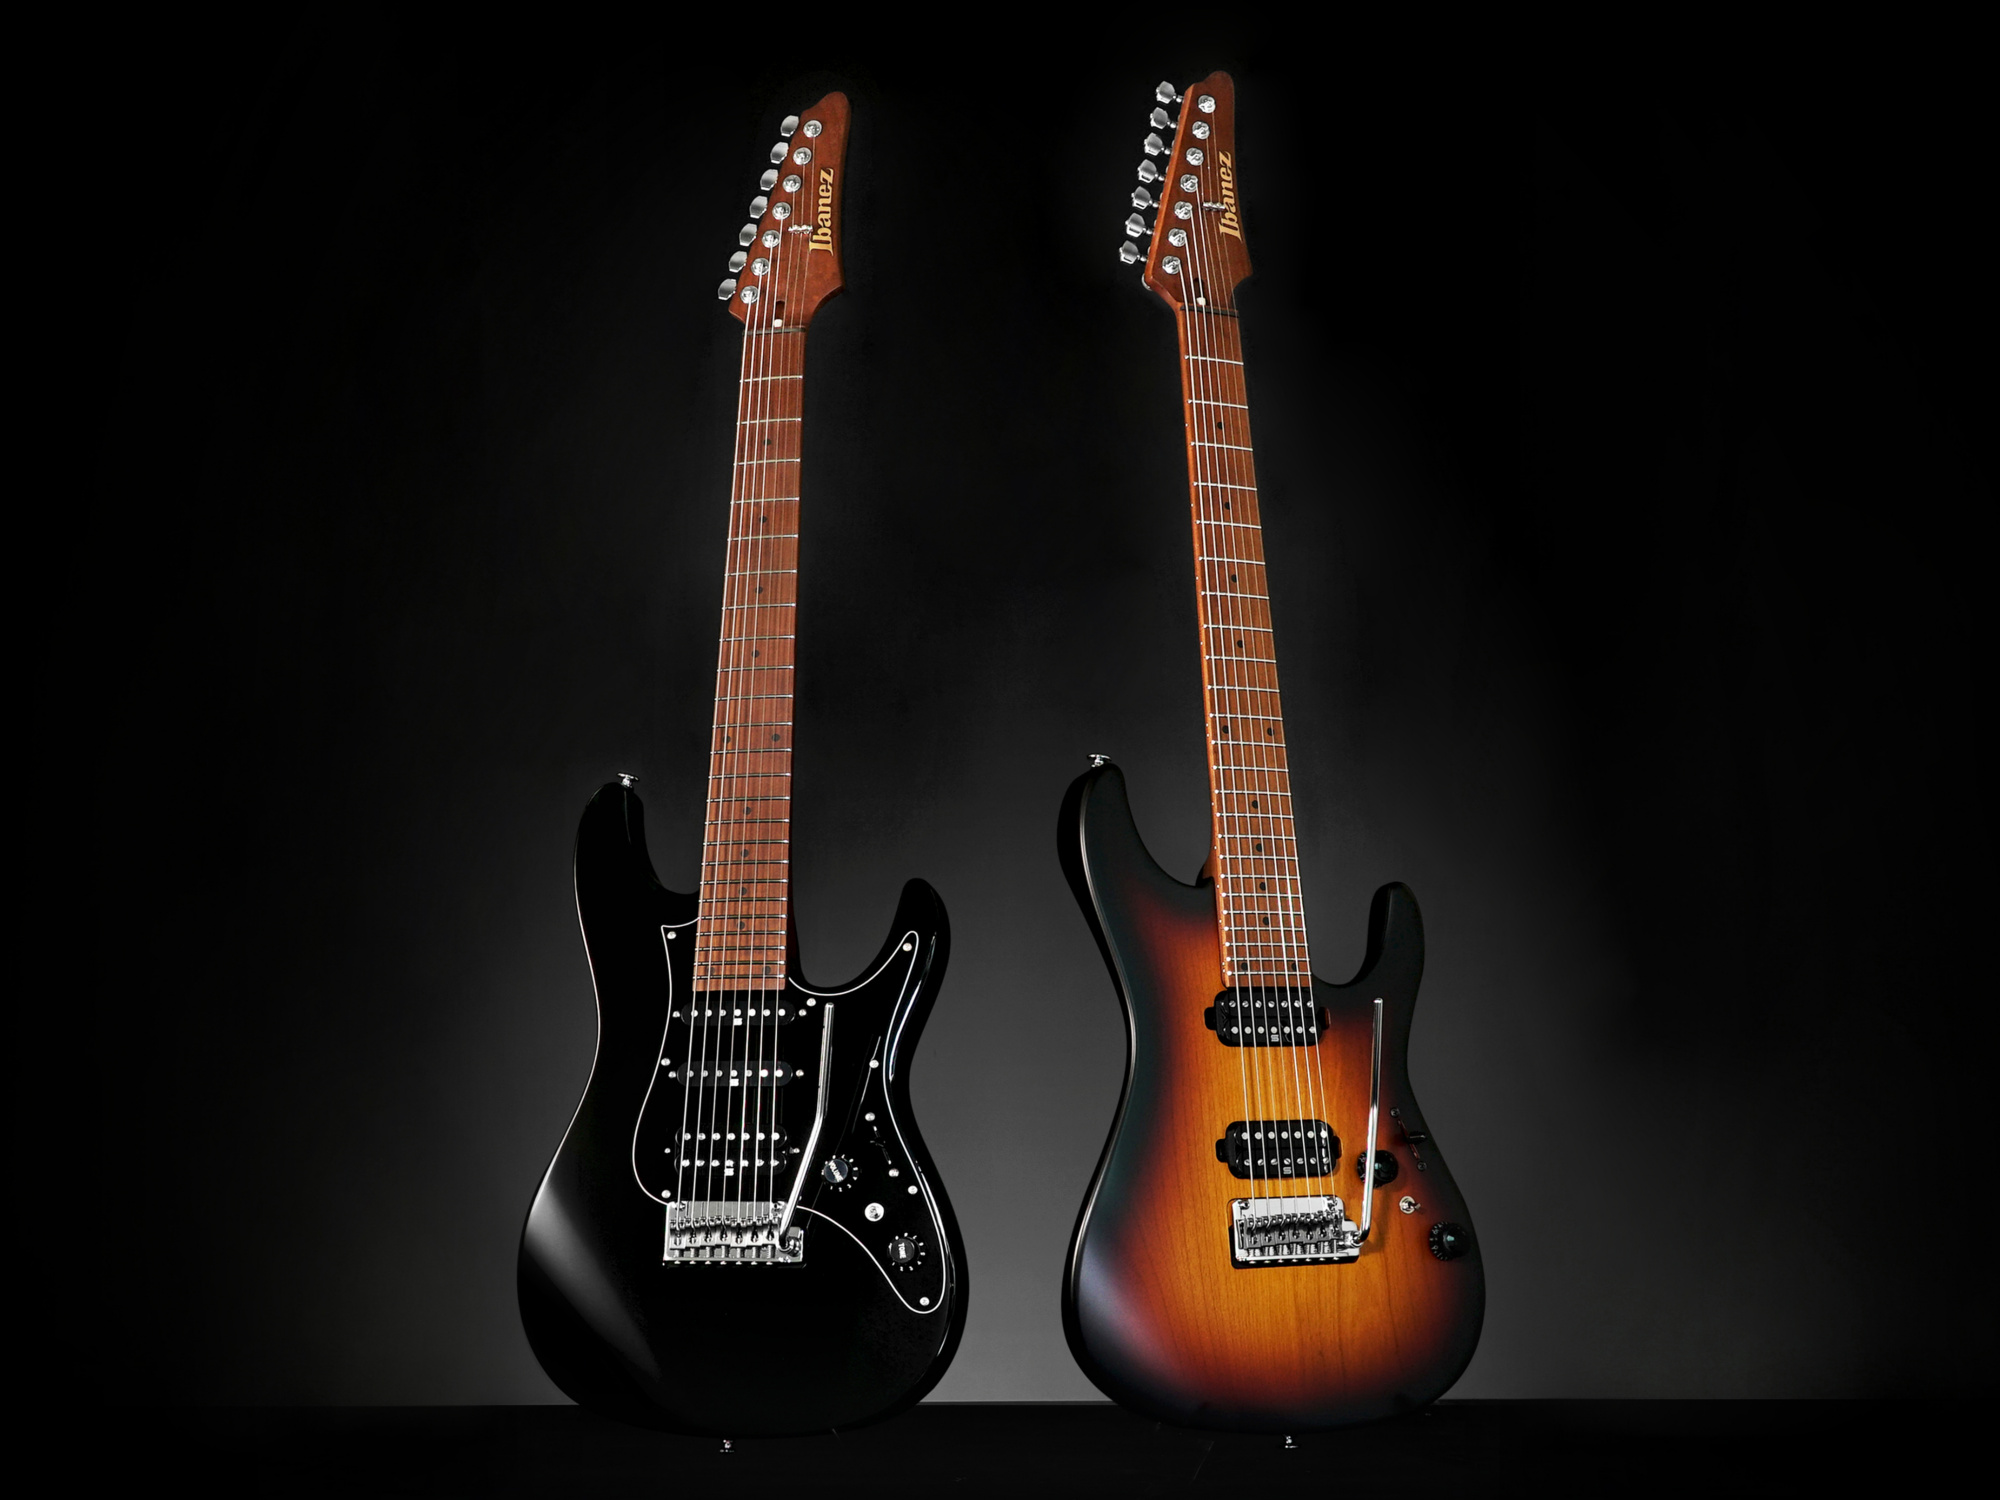 AZシリーズでラインナップする7弦ギターの新世代モデル"AZ-7"